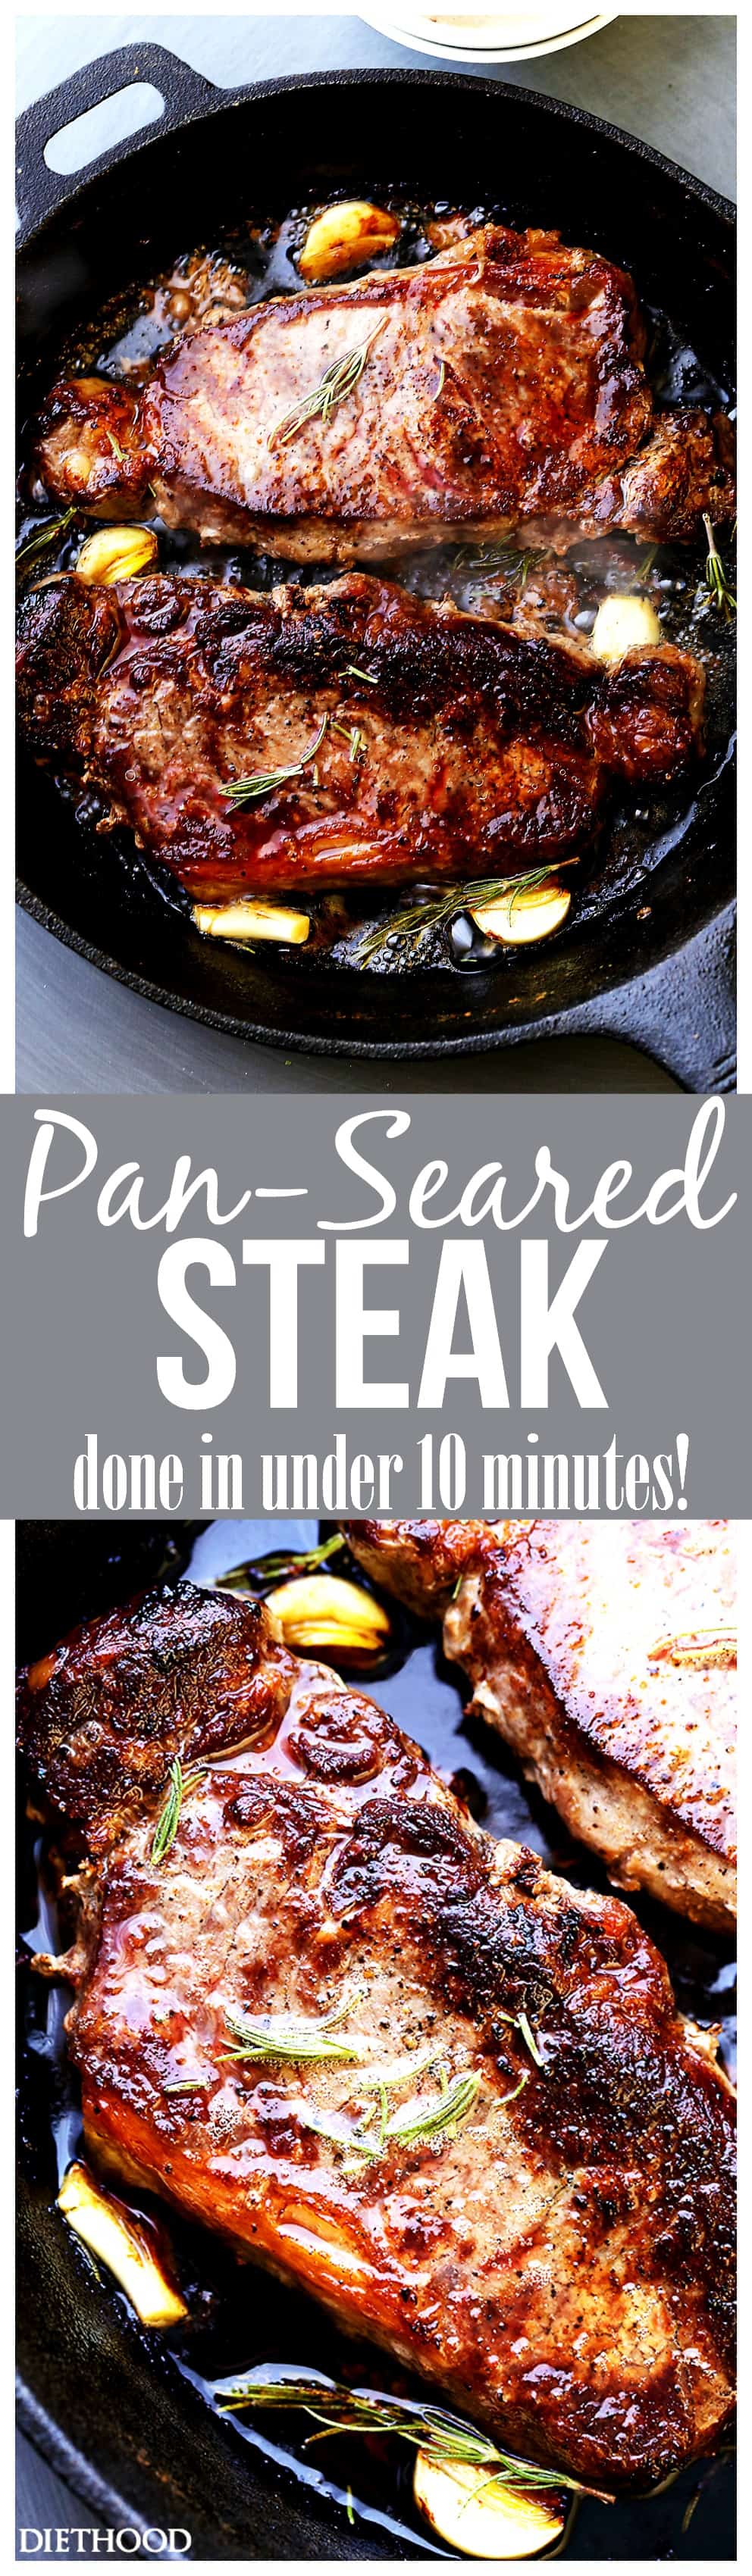 Easy Pan-Seared Steak with Cognac Sauce | Diethood